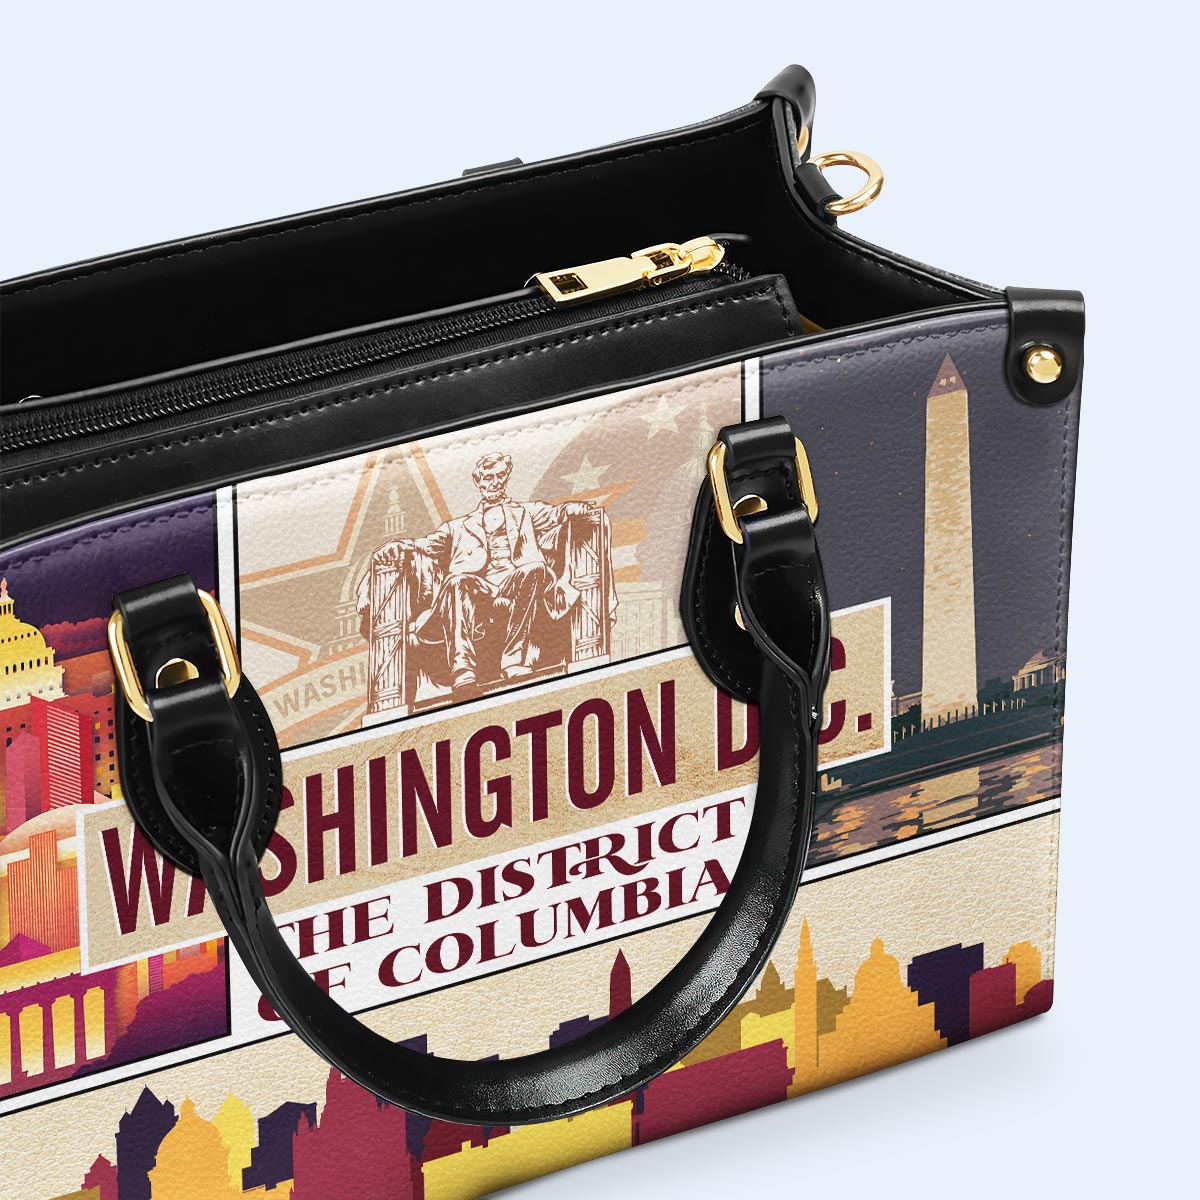 Washington D.C. - Leather Handbag - DC01